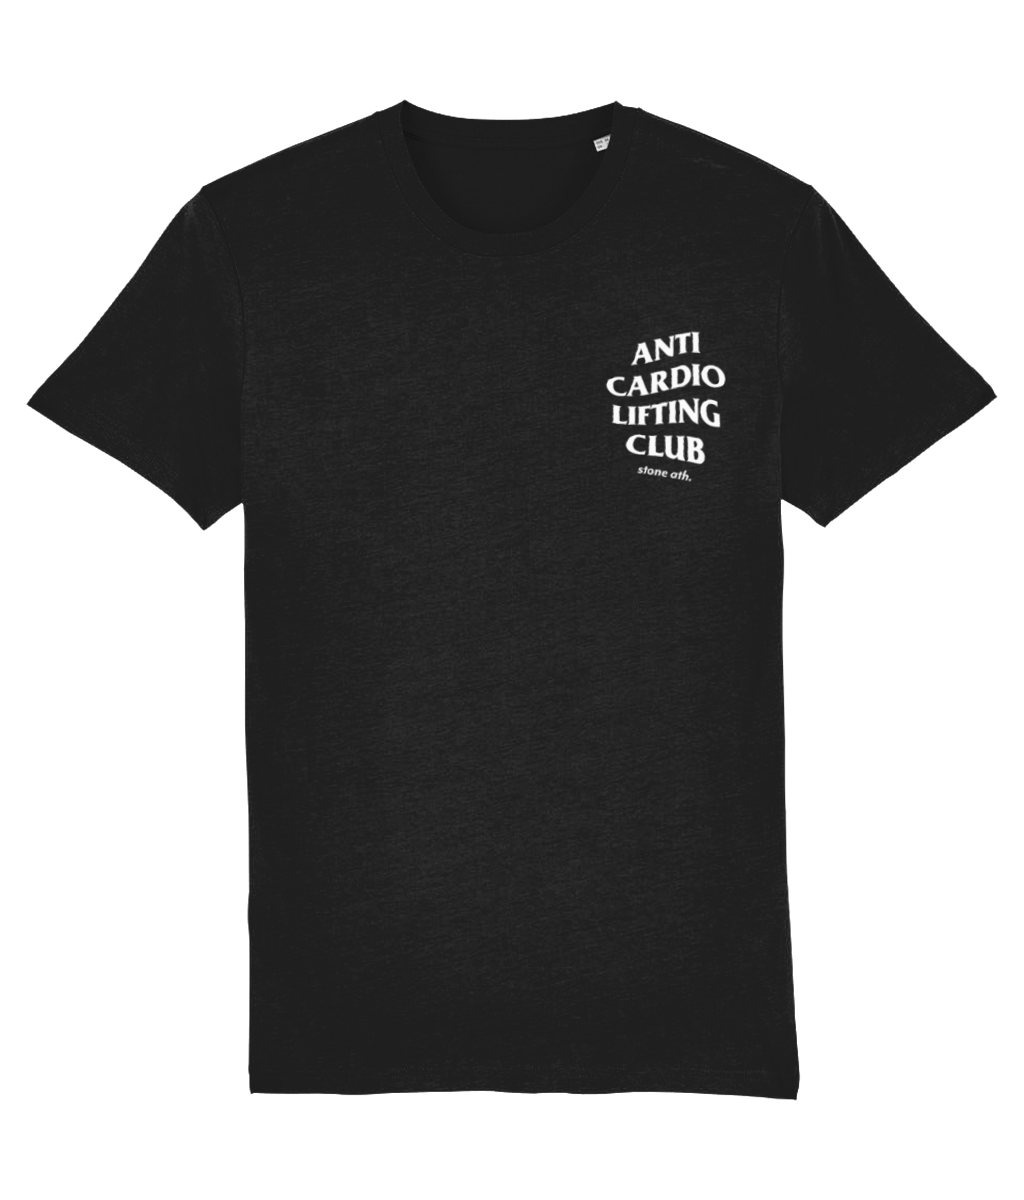 Anti cardio lifting club t-shirt